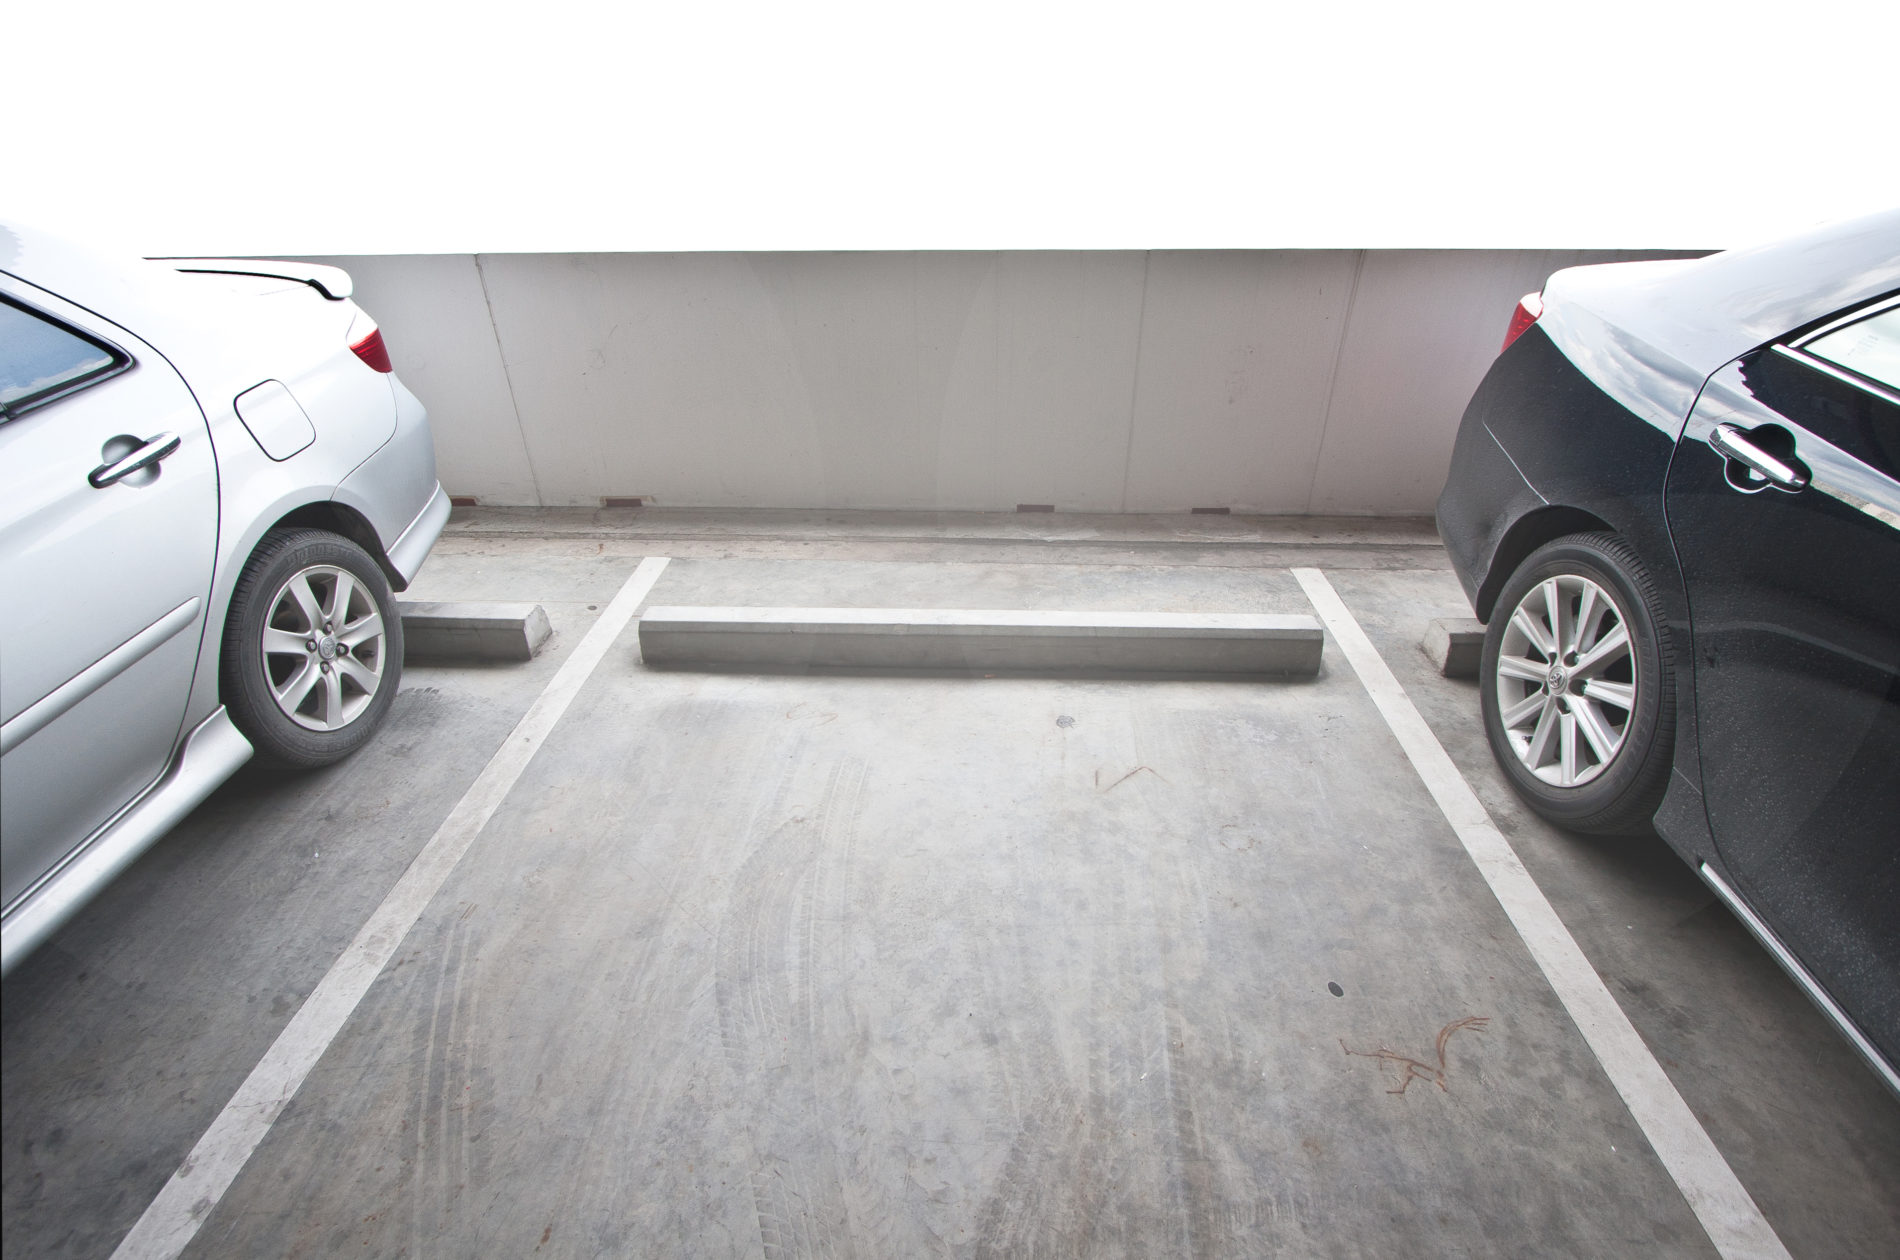 Eliminating Cheap Parking's Negative Externalities